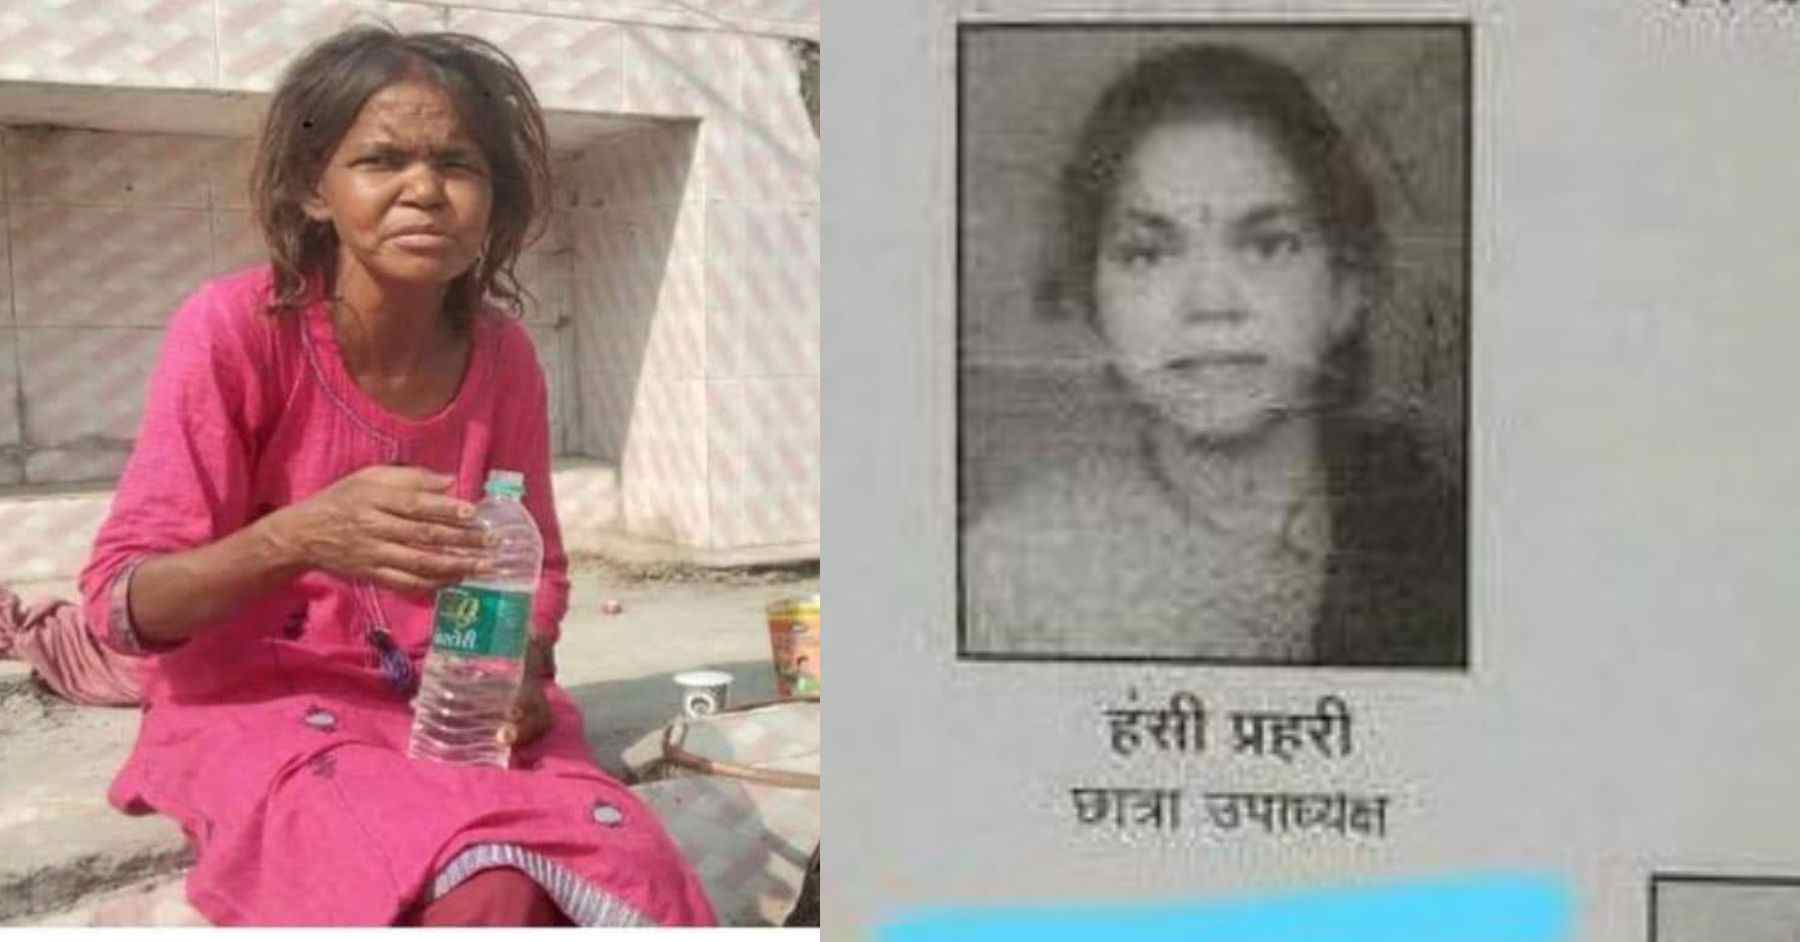 Uttarakhand news: student Vice President hansi prahari of someshwar almora death in haridwar. Almora Hansi prahari Death